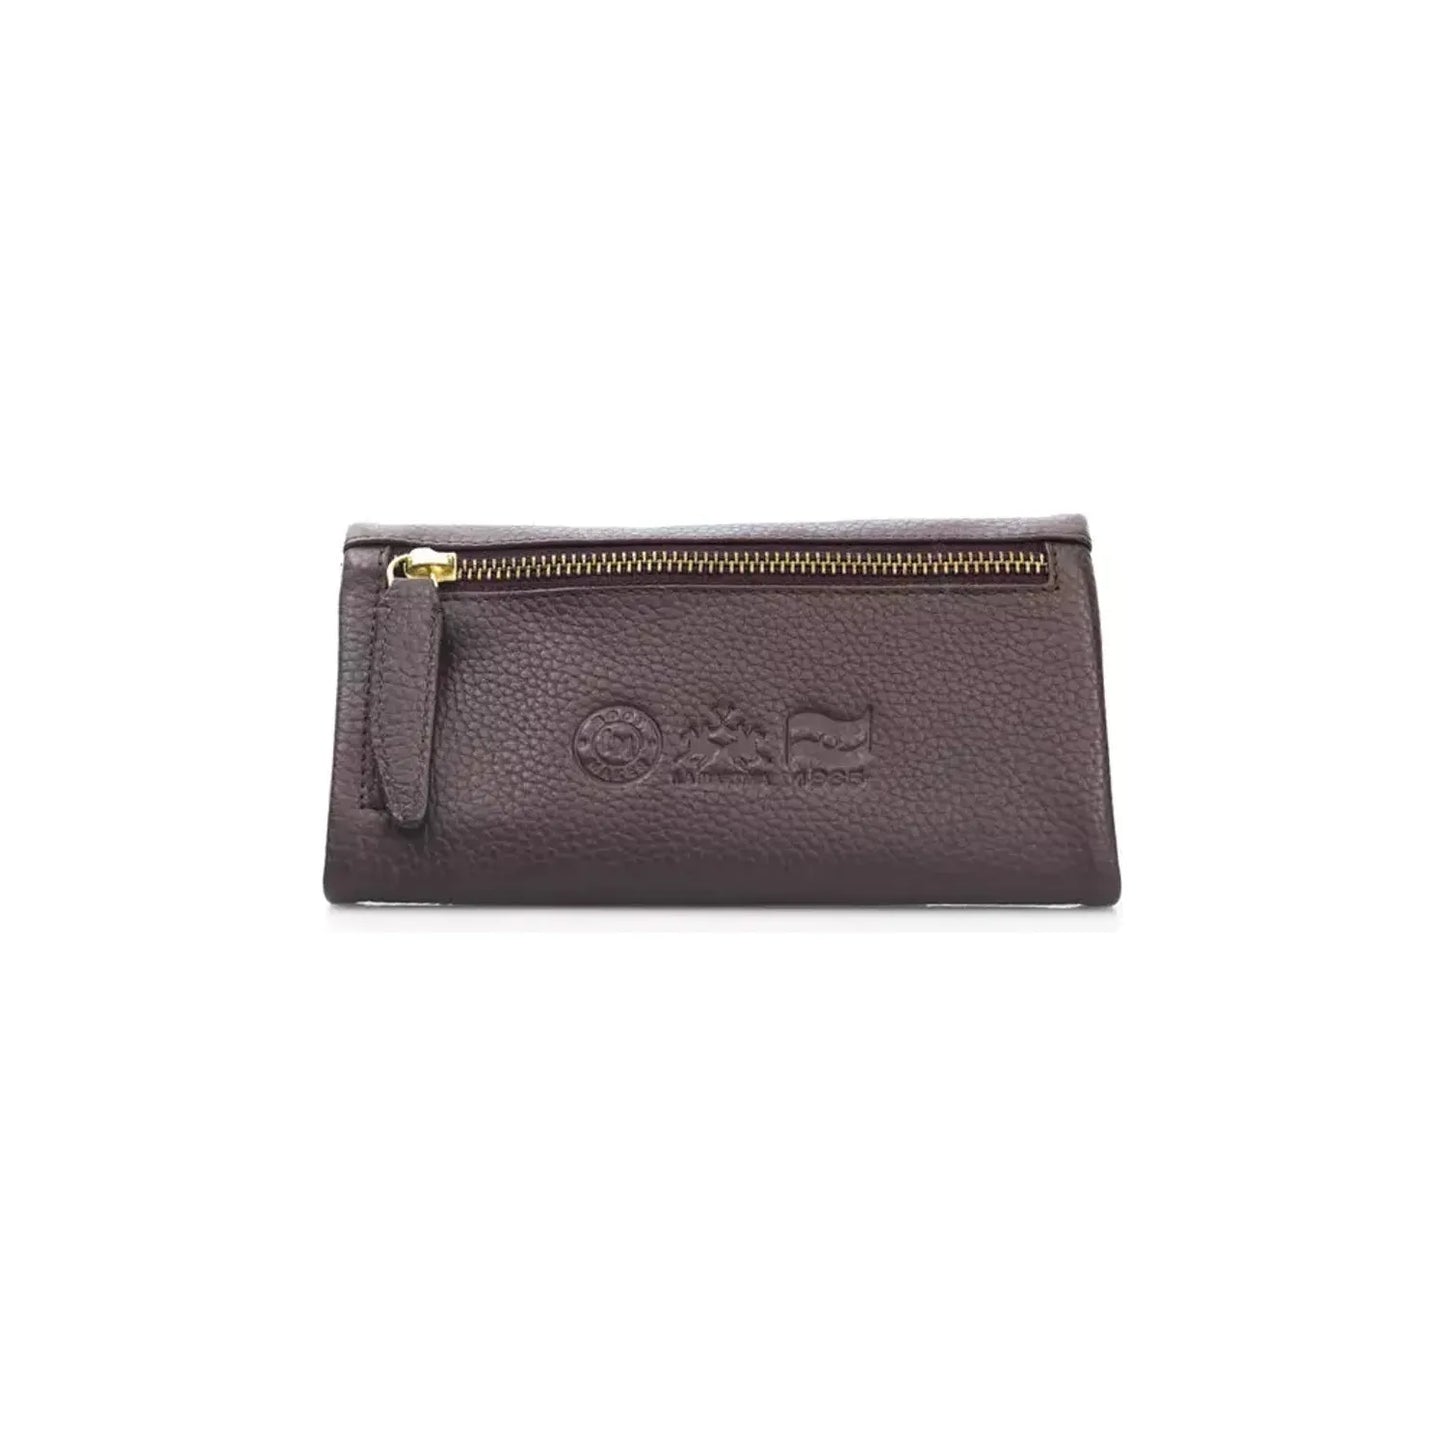 La Martina Sleek Elegance Leather Wallet black-wallet-39